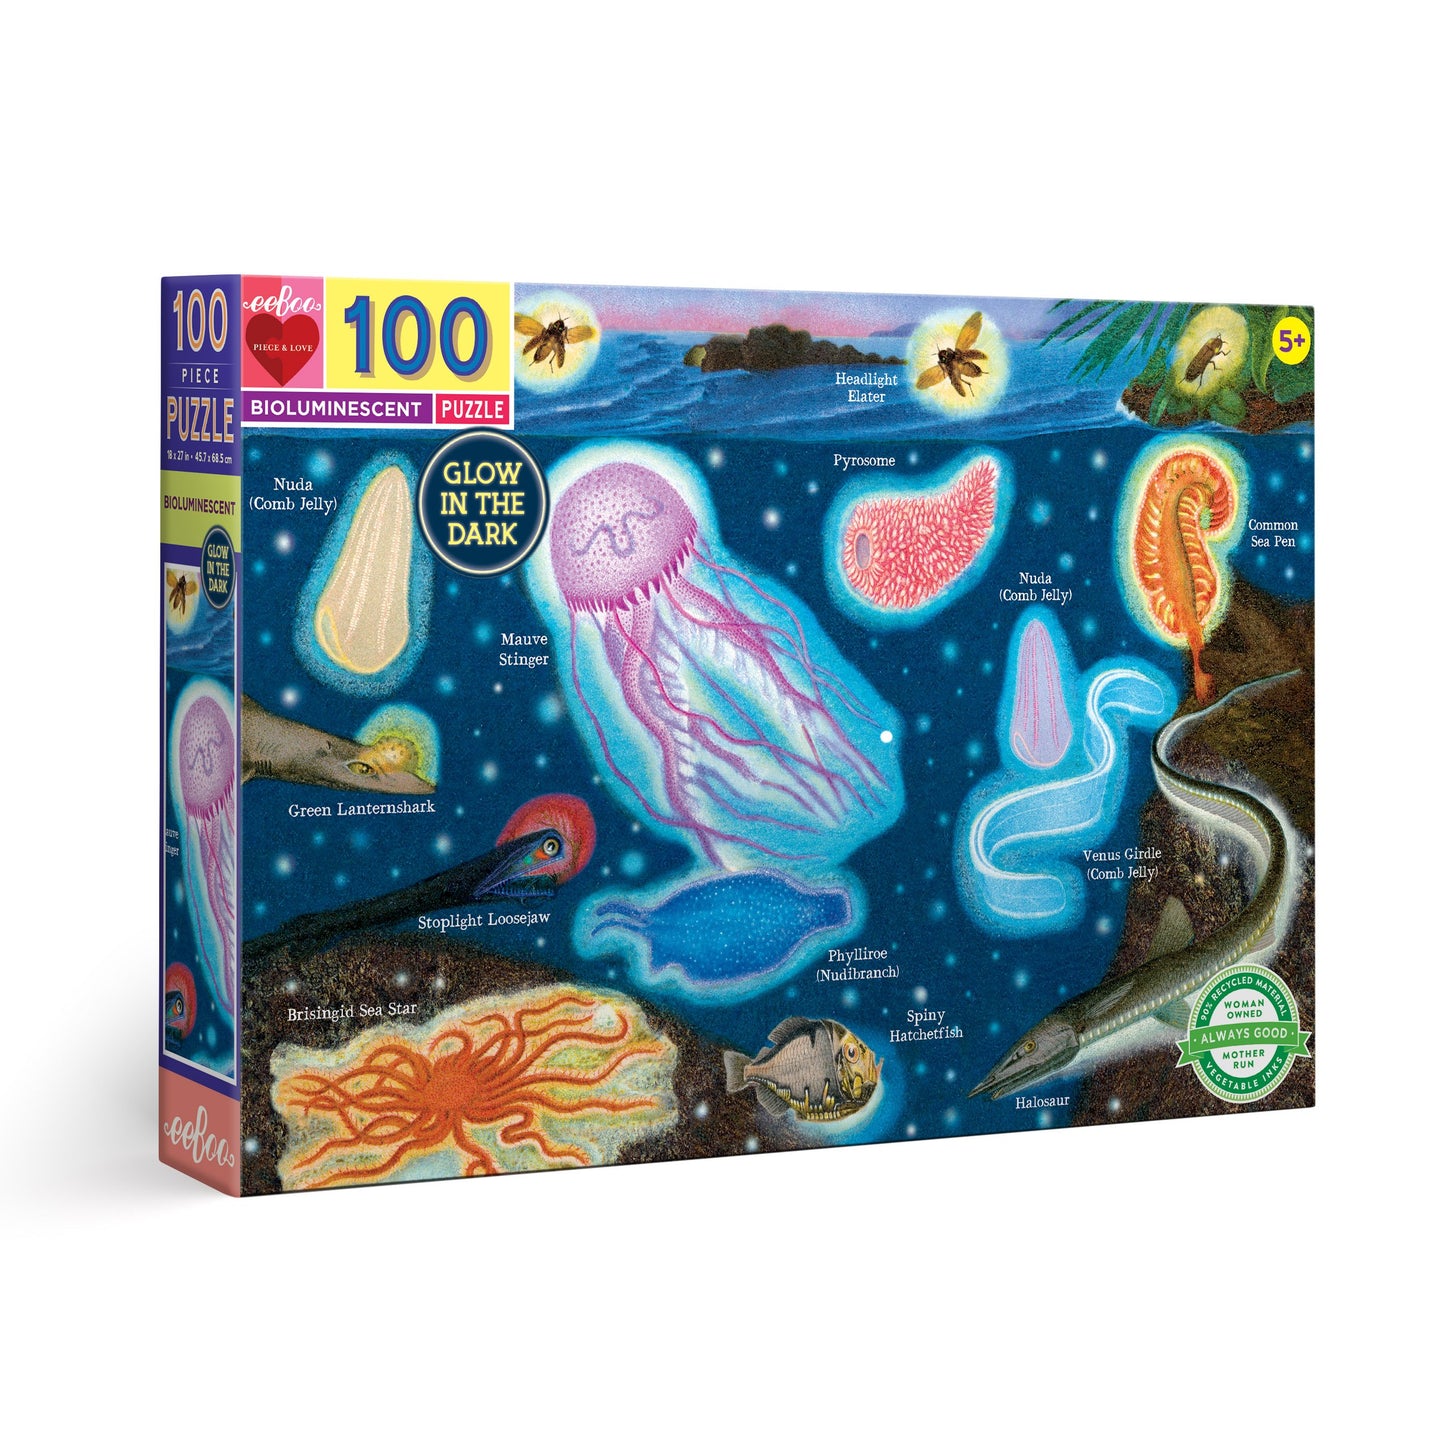 eeBoo - Bioluminescent 100 Piece Puzzle